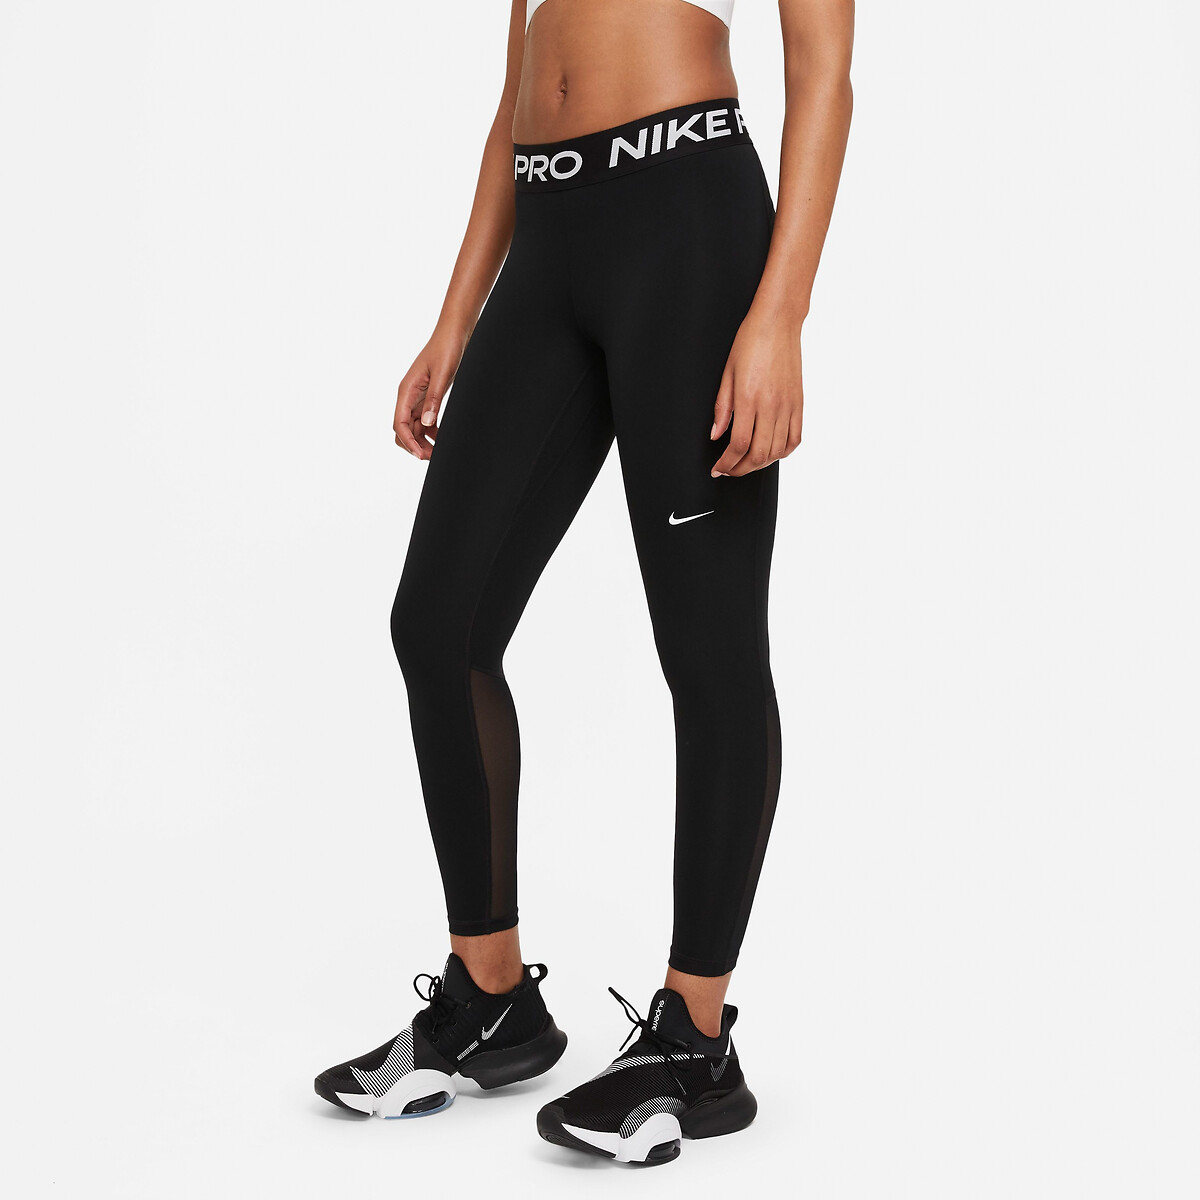 Produce Intento siete y media Leggings de deporte con logo en la pierna negro Nike | La Redoute